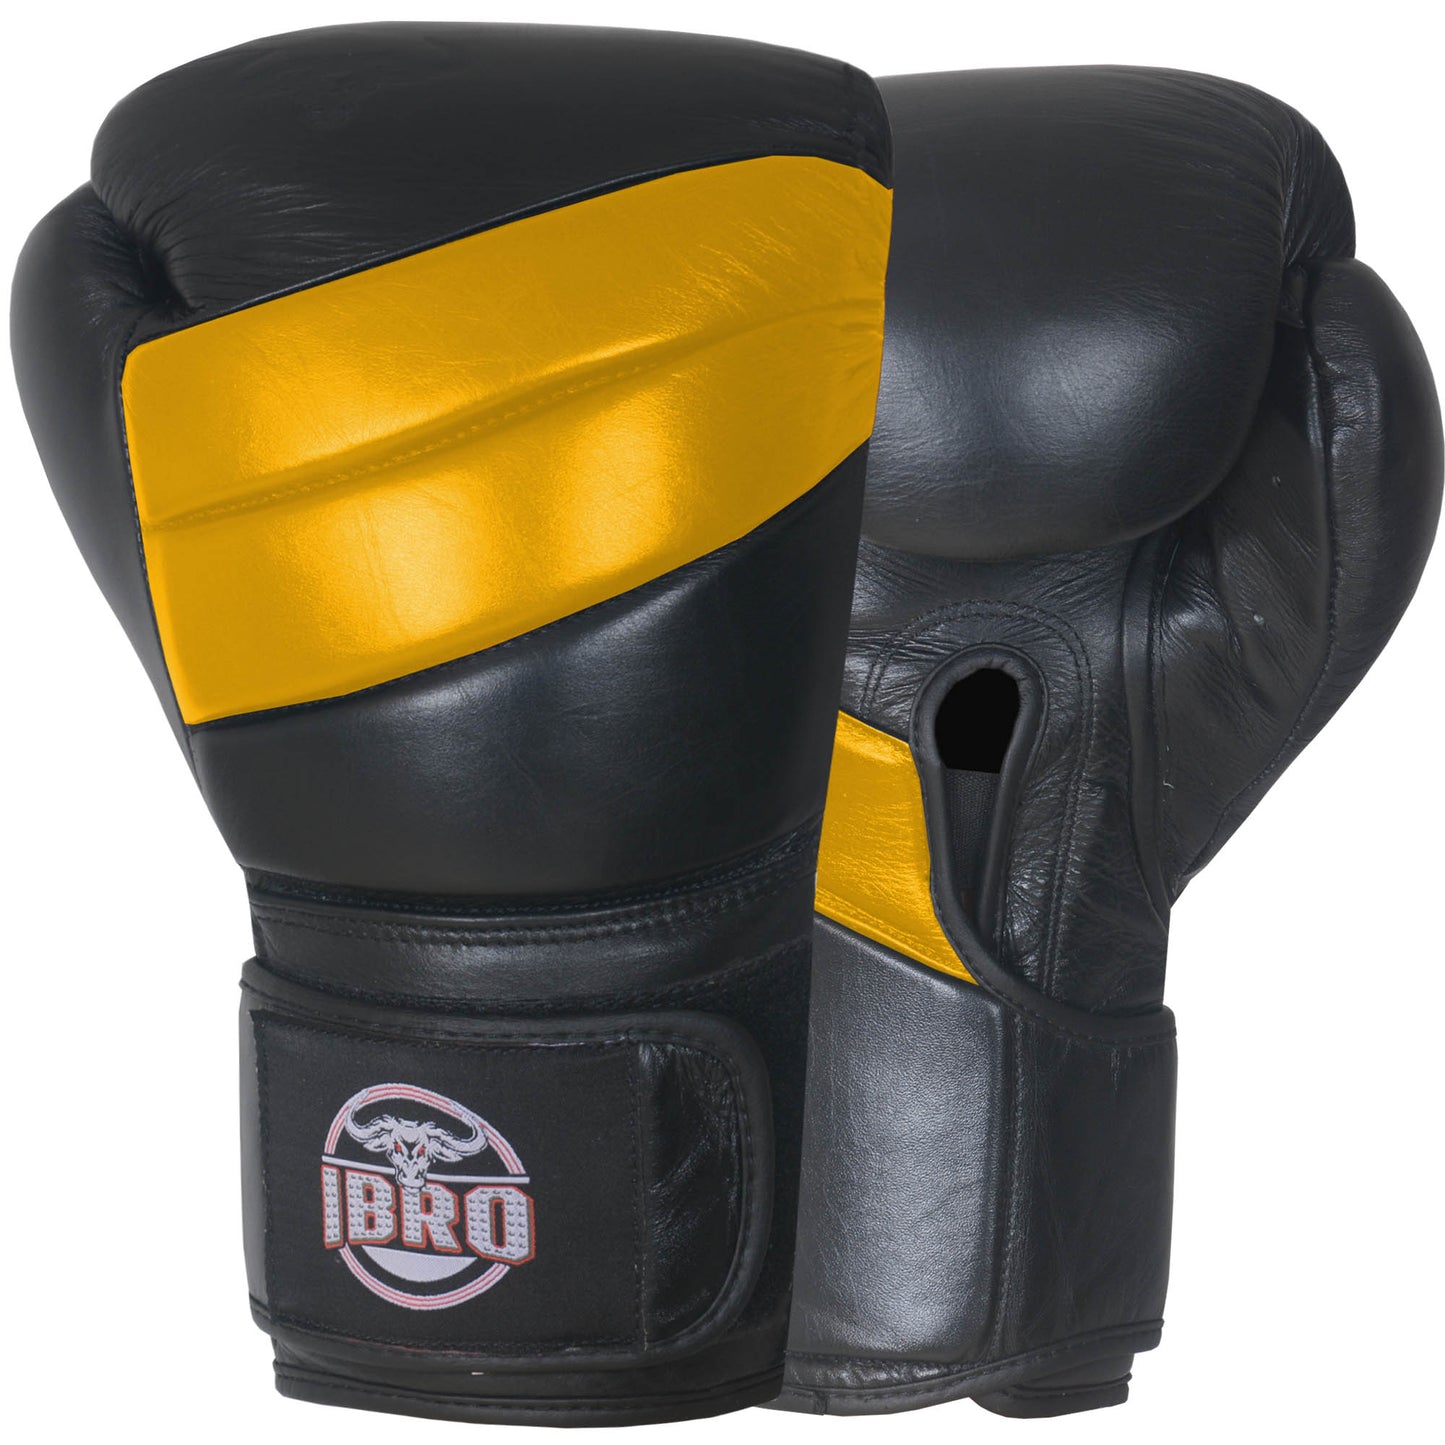 IBRO Iconic PRO Leather Boxing Training Gloves BlackGolden